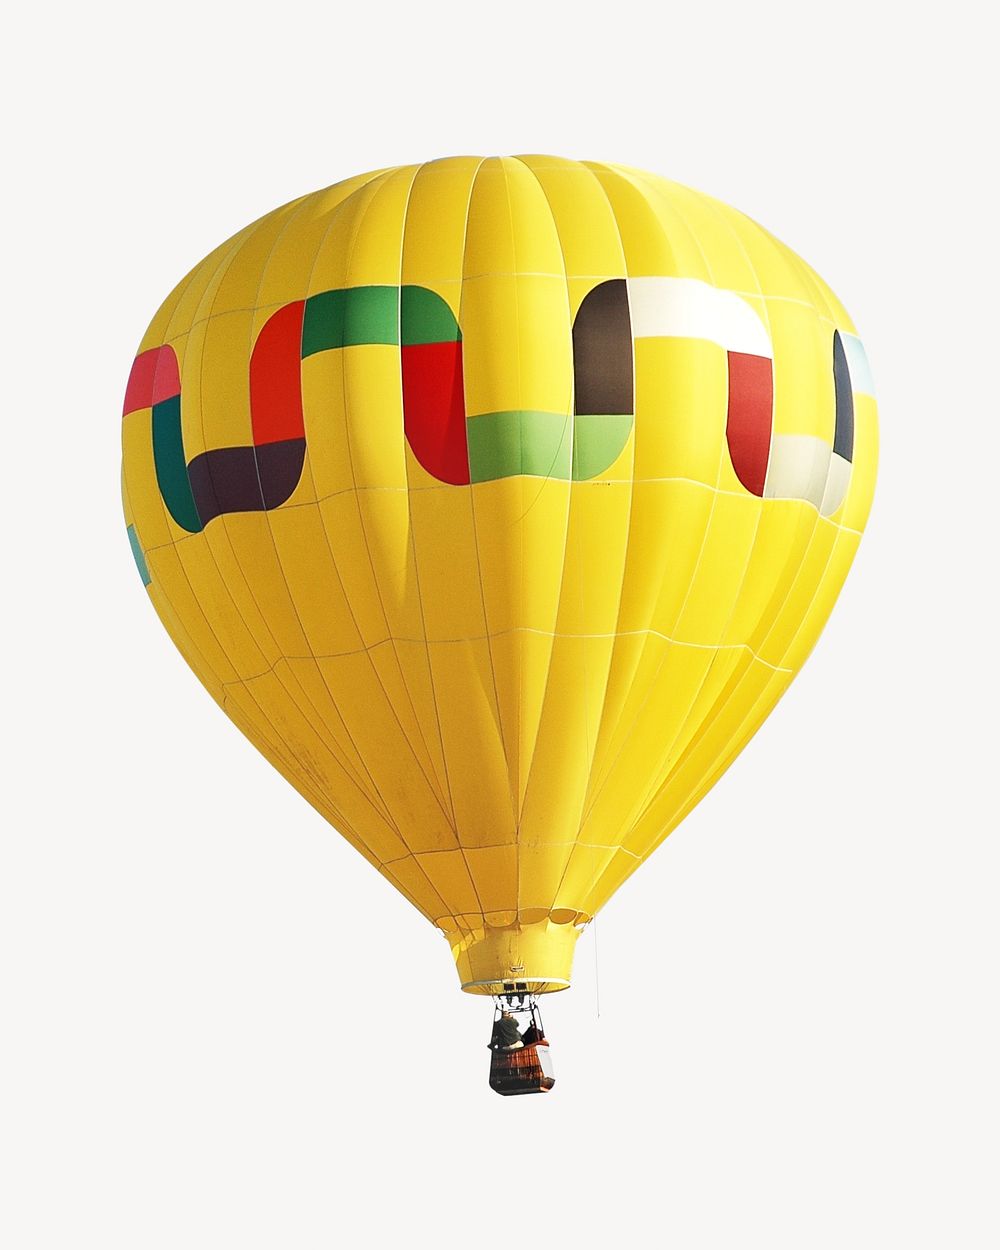 Festival travel balloon isolated image on white